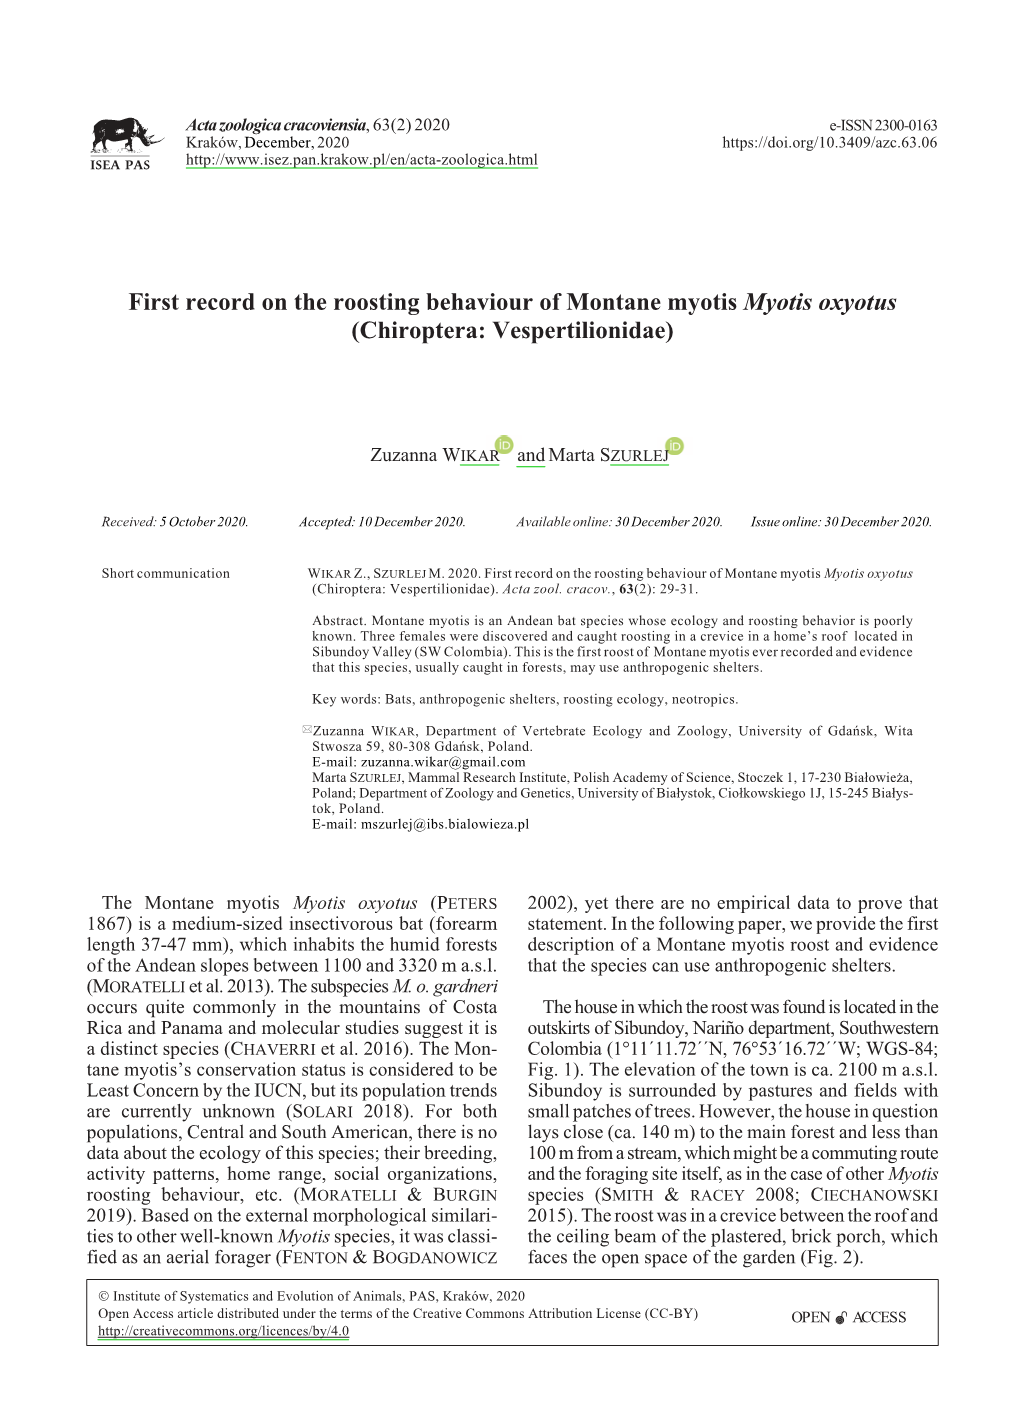 First Record on the Roosting Behaviour of Montane Myotis &lt;I&gt;Myotis